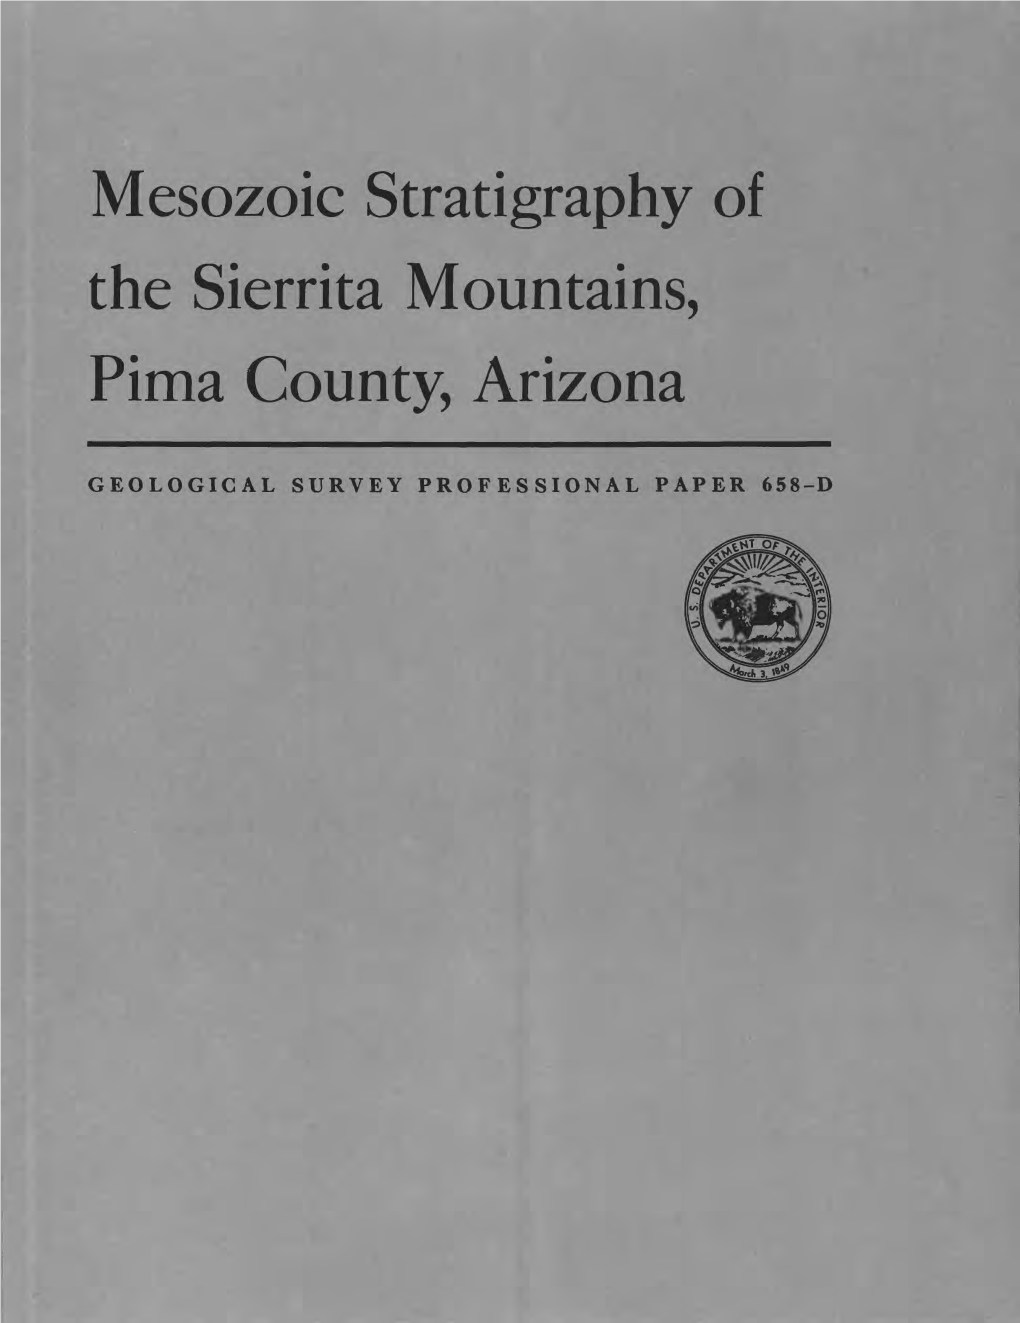 Mesozoic Stratigraphy of the Sierrita Mountains, Pima County, Arizona